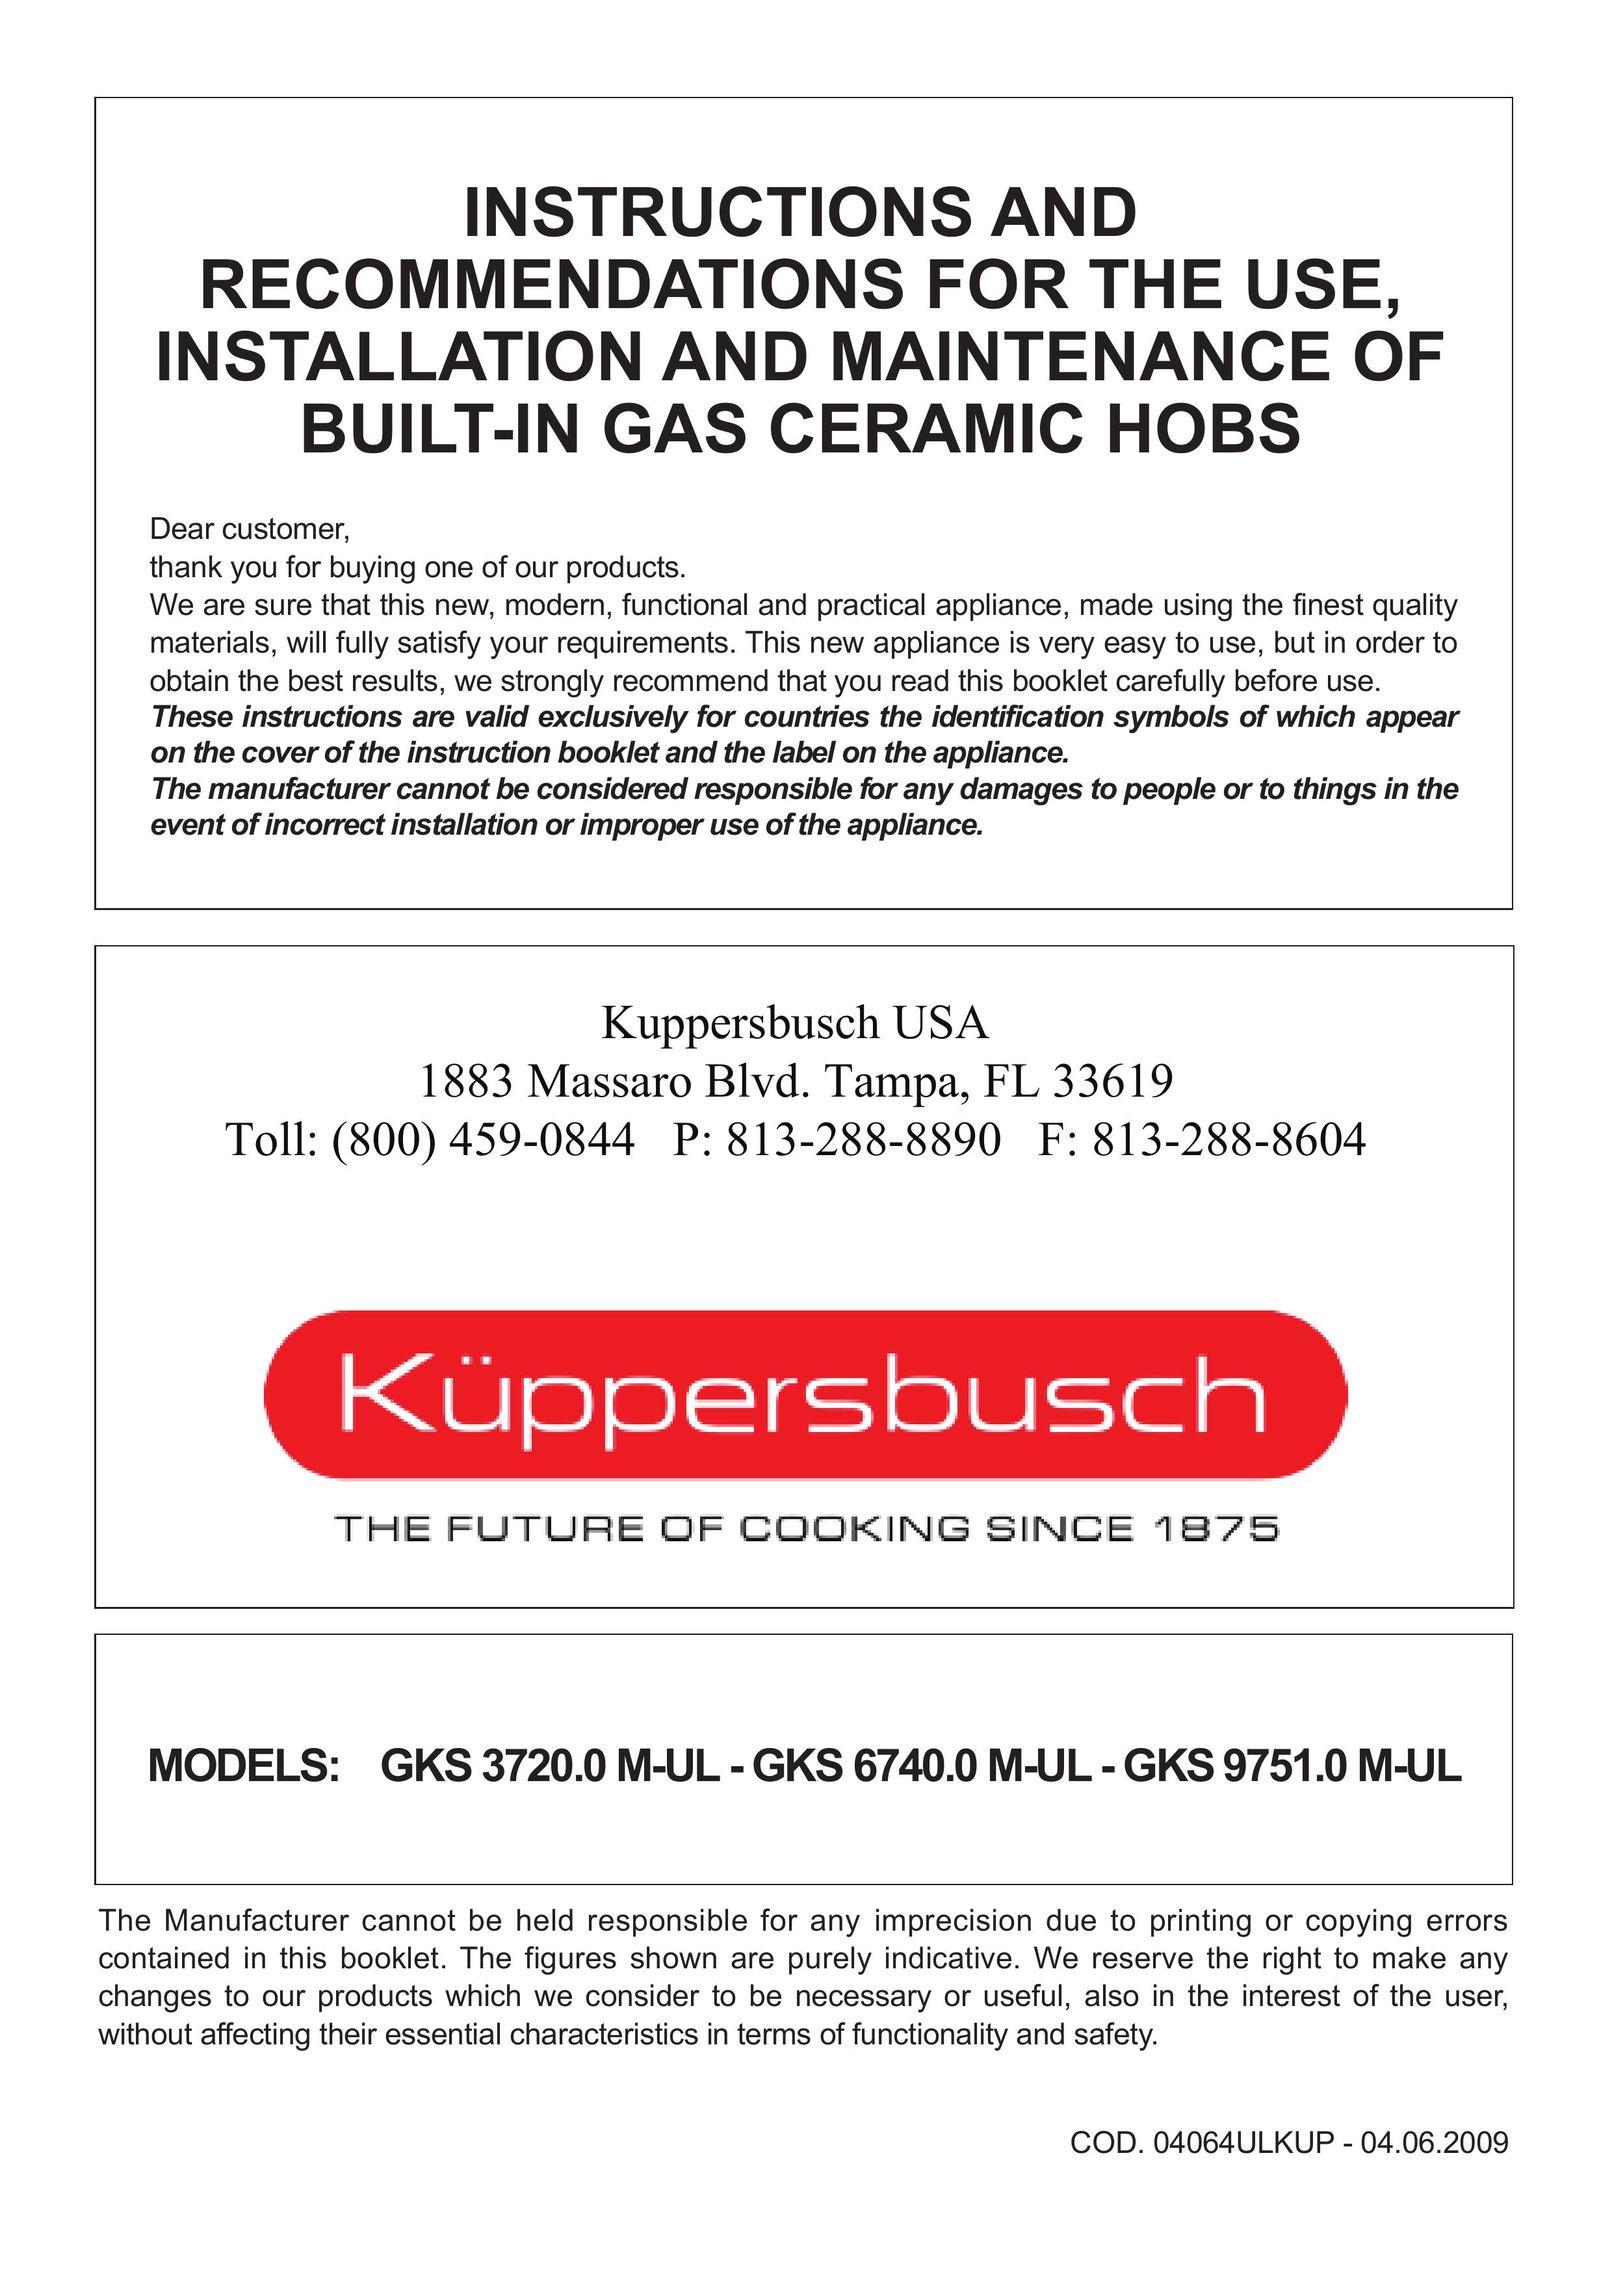 Kuppersbusch USA GKS 6740.0 M-UL Cooktop User Manual